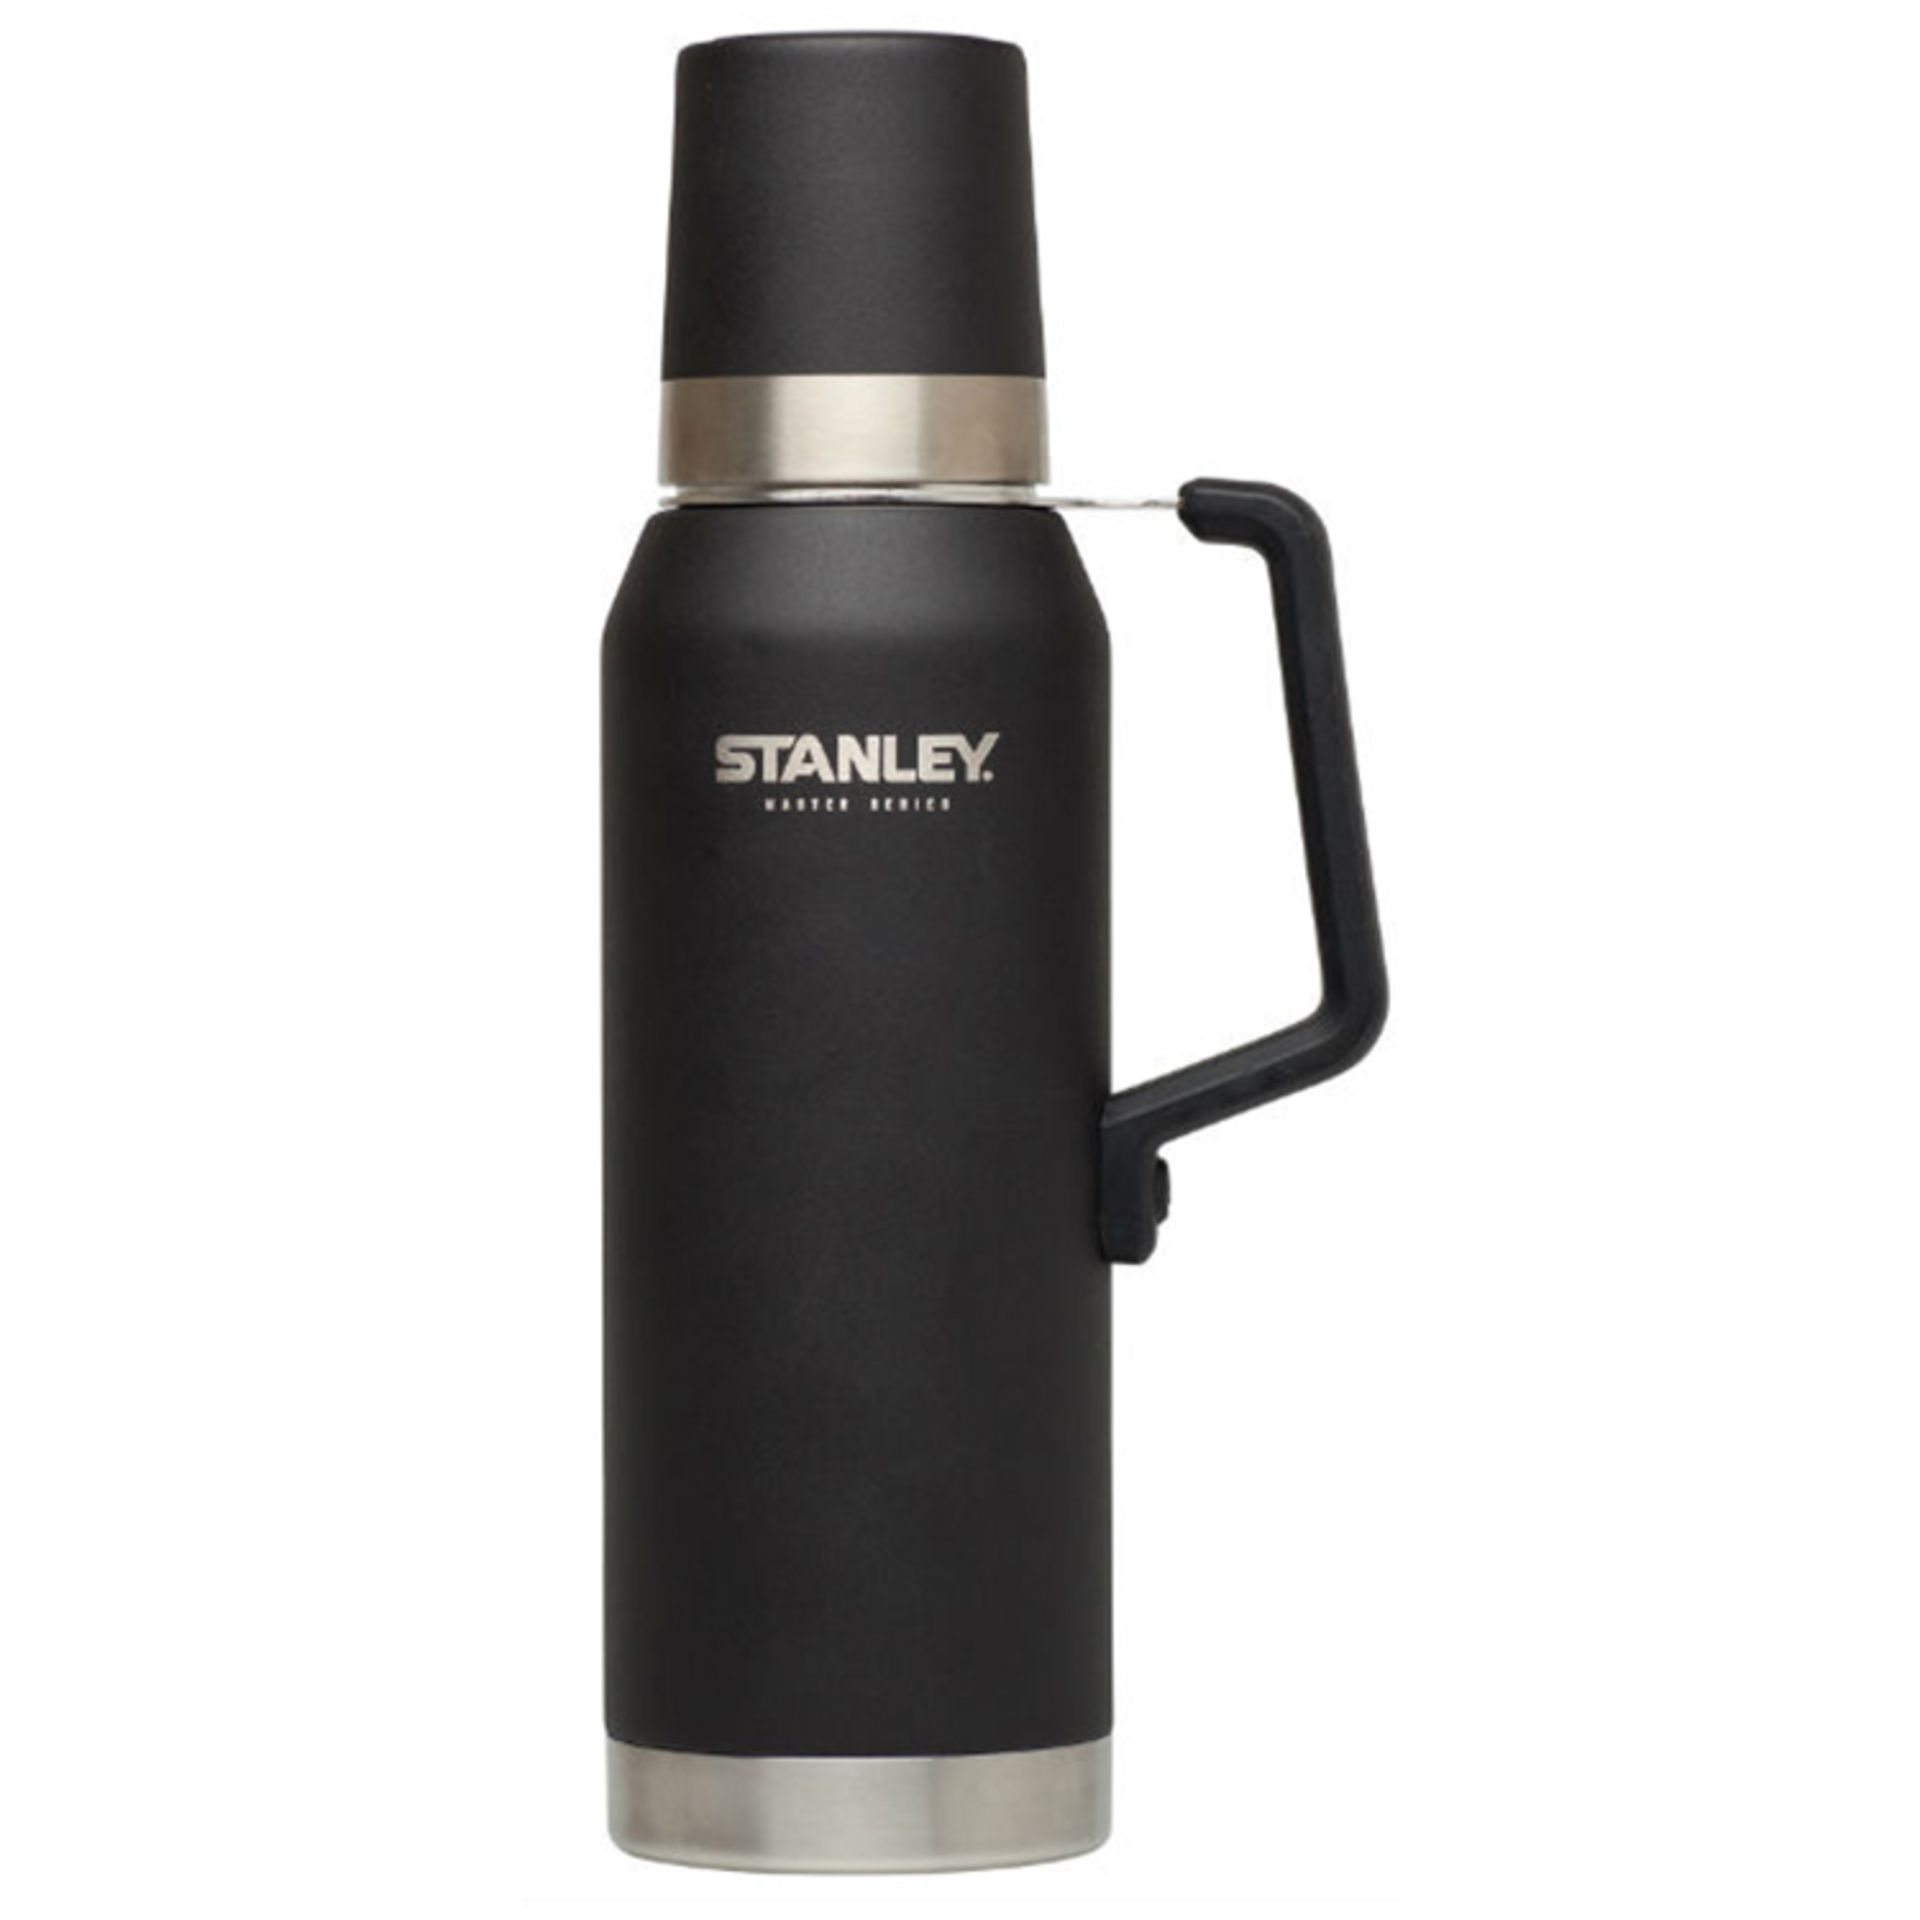 4 x Stanley Master Series 1.3L Vacuum Flask - this